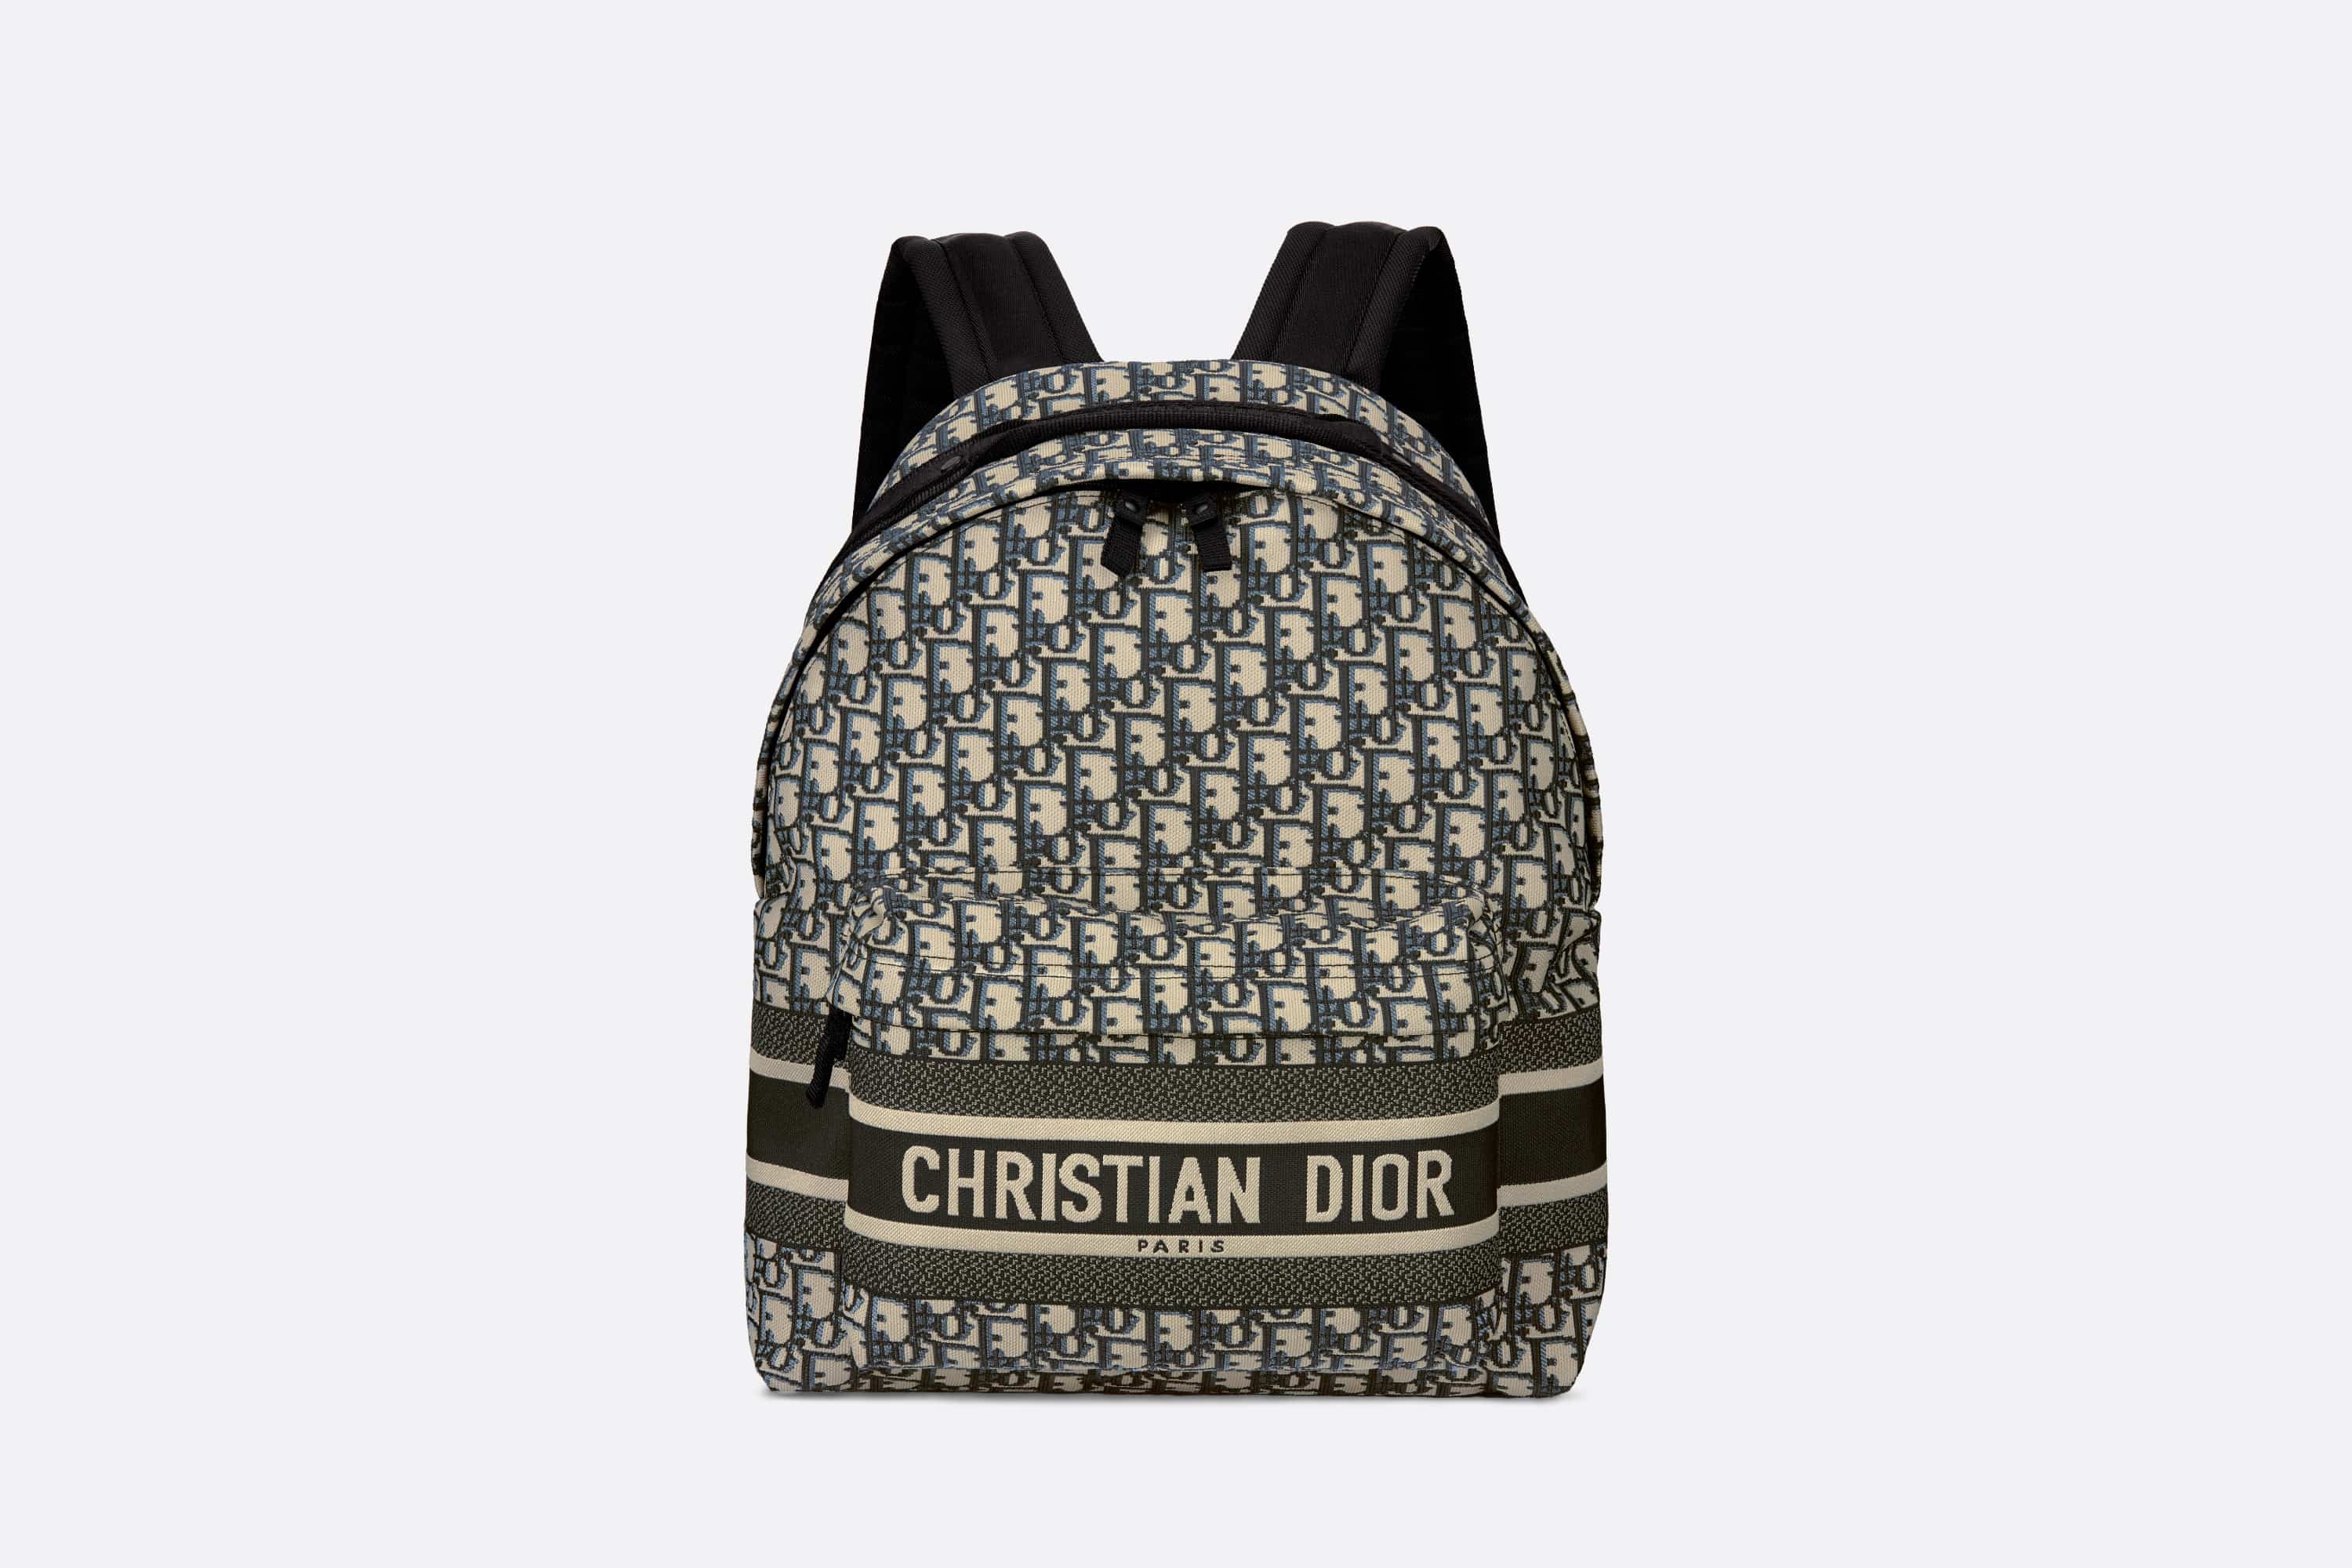 DiorTravel Backpack - 1